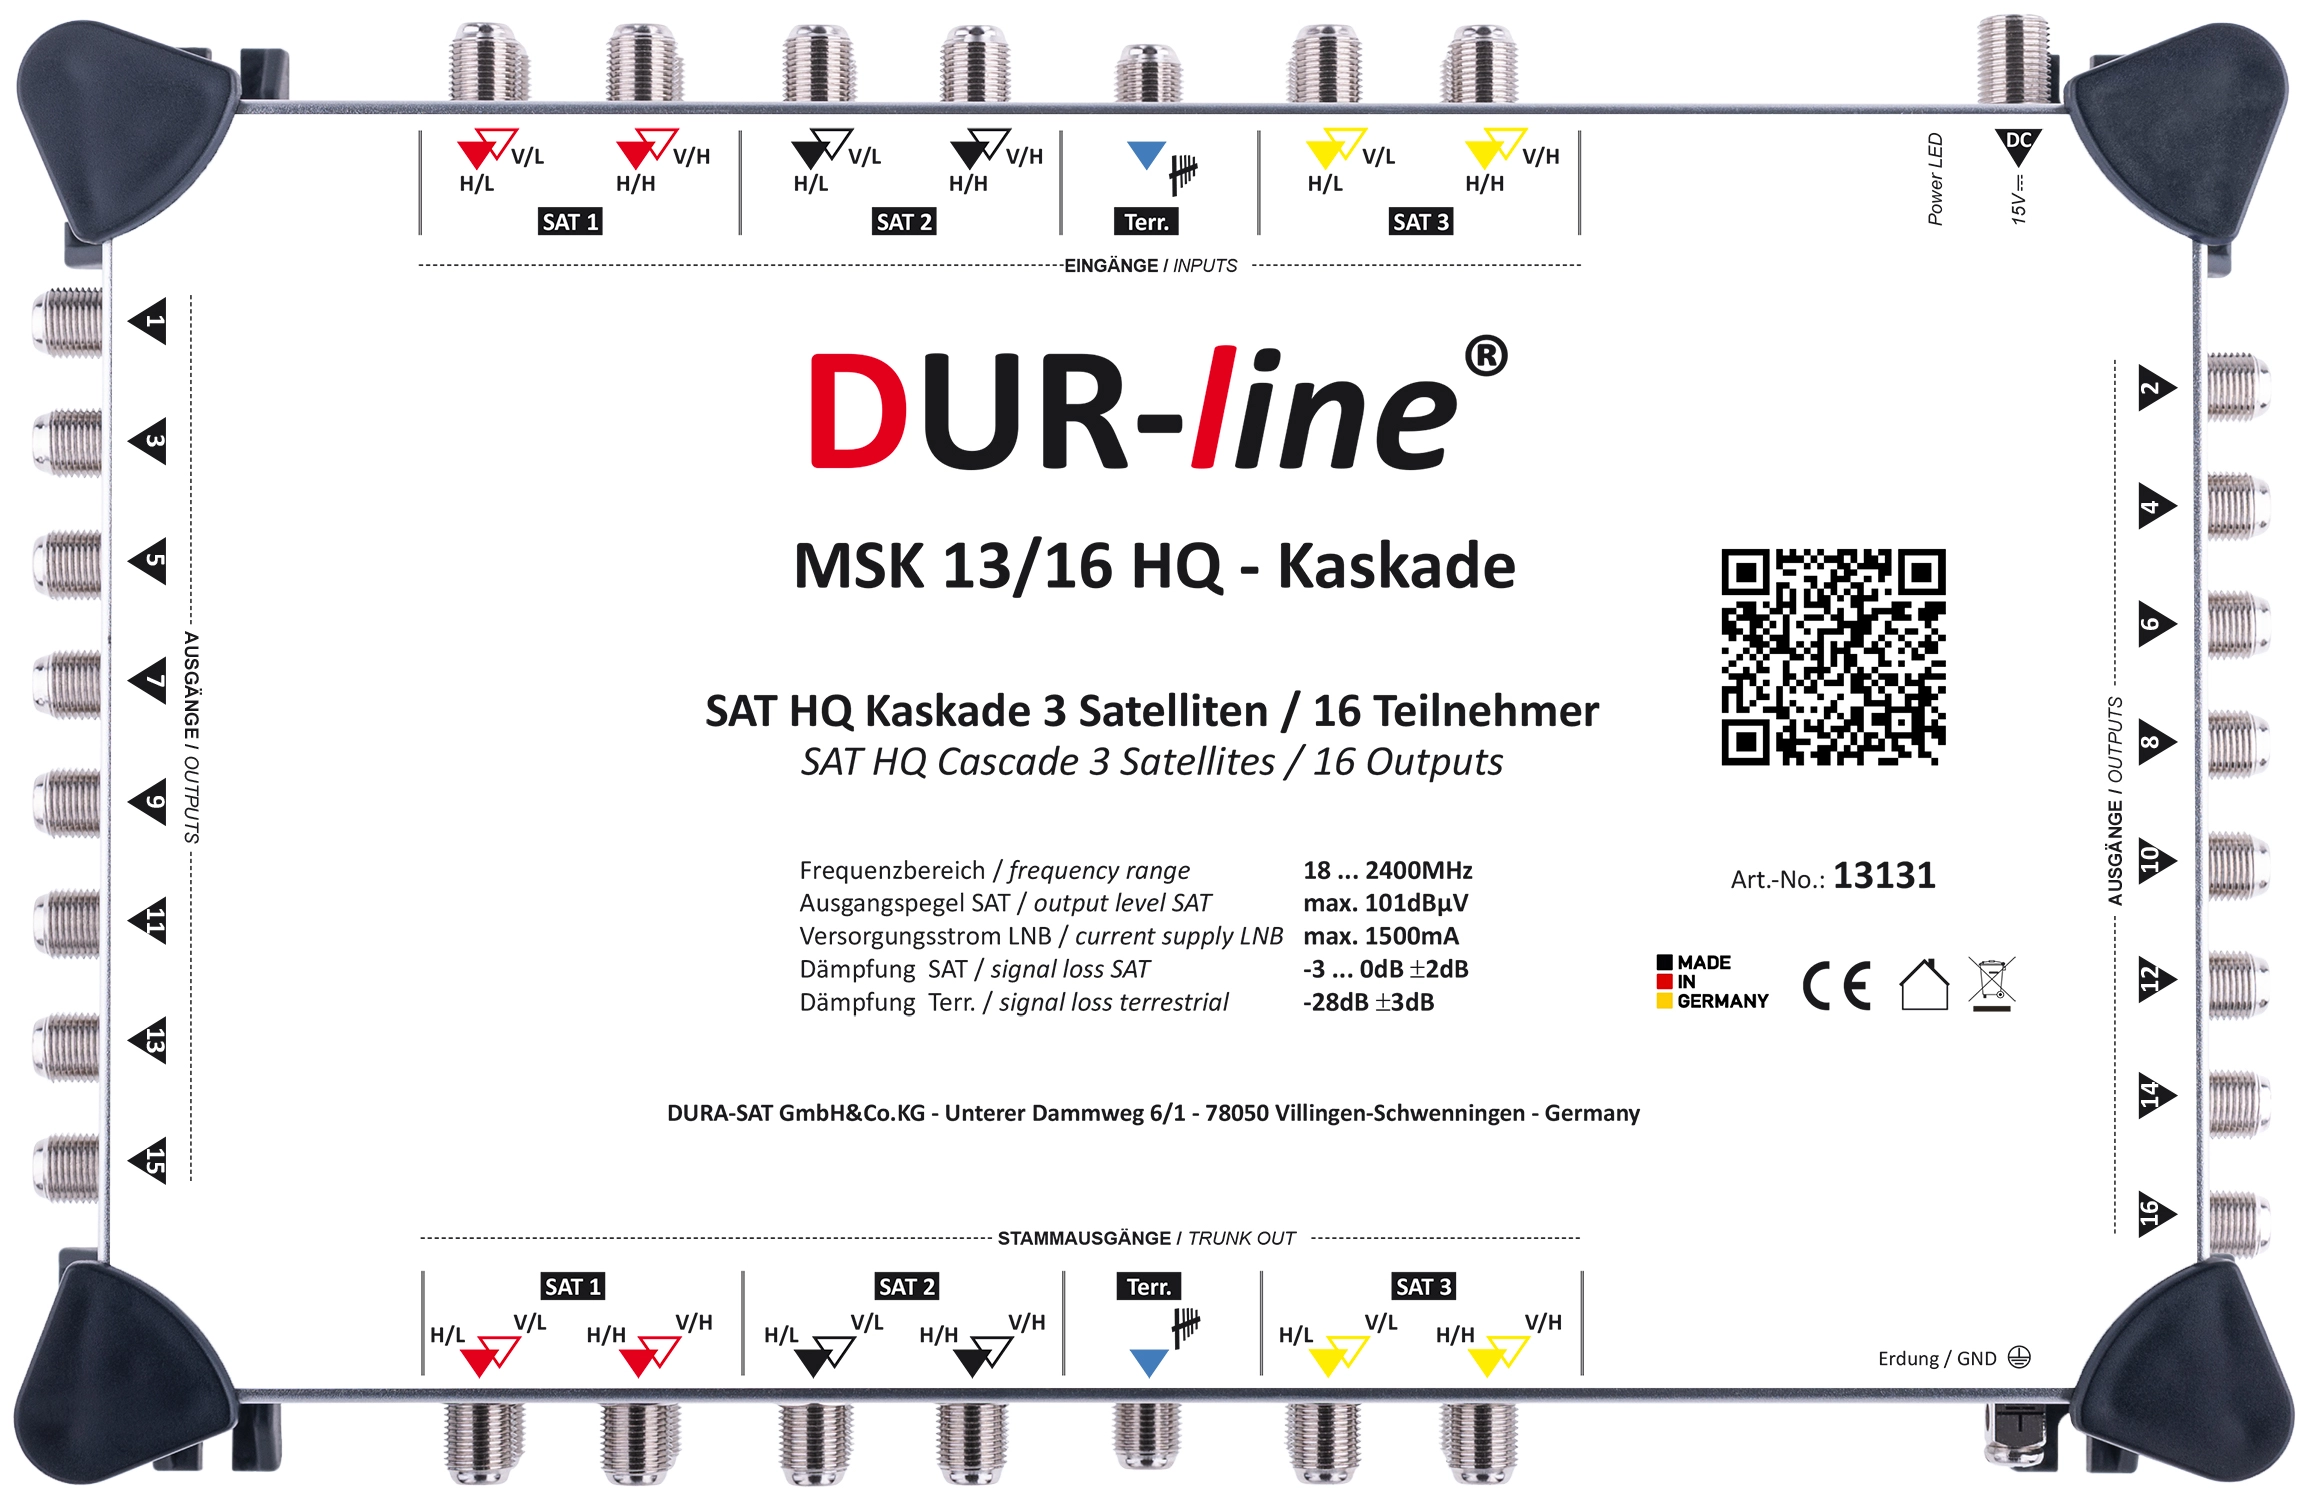 DUR-line MSK 13/16 HQ - Kaskade